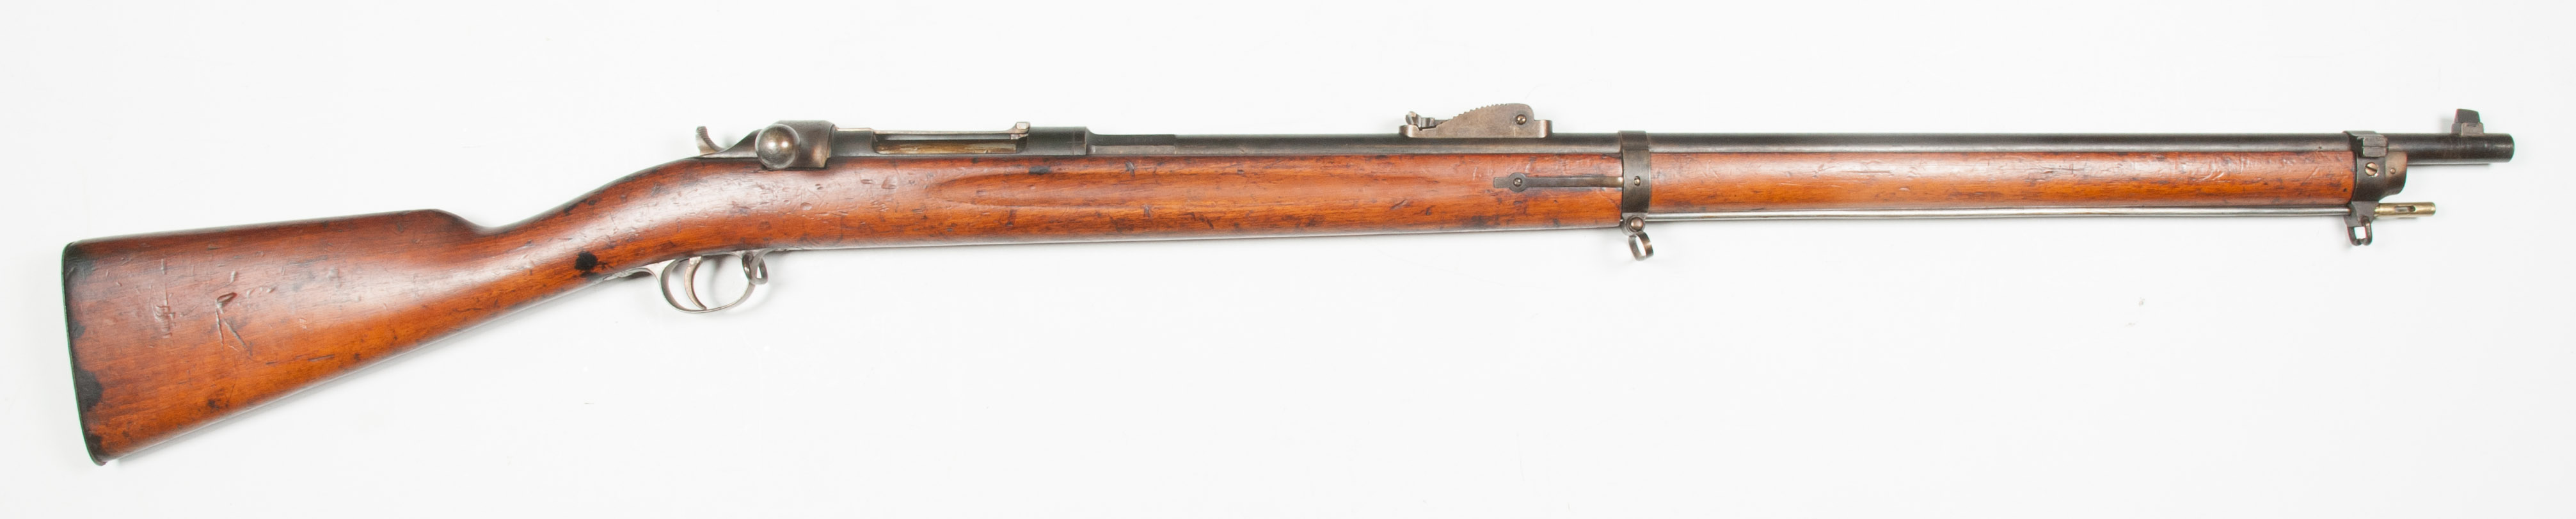 ./guns/rifle/bilder/Rifle-Kongsberg-Jarmann-M1884-11285-1.jpg